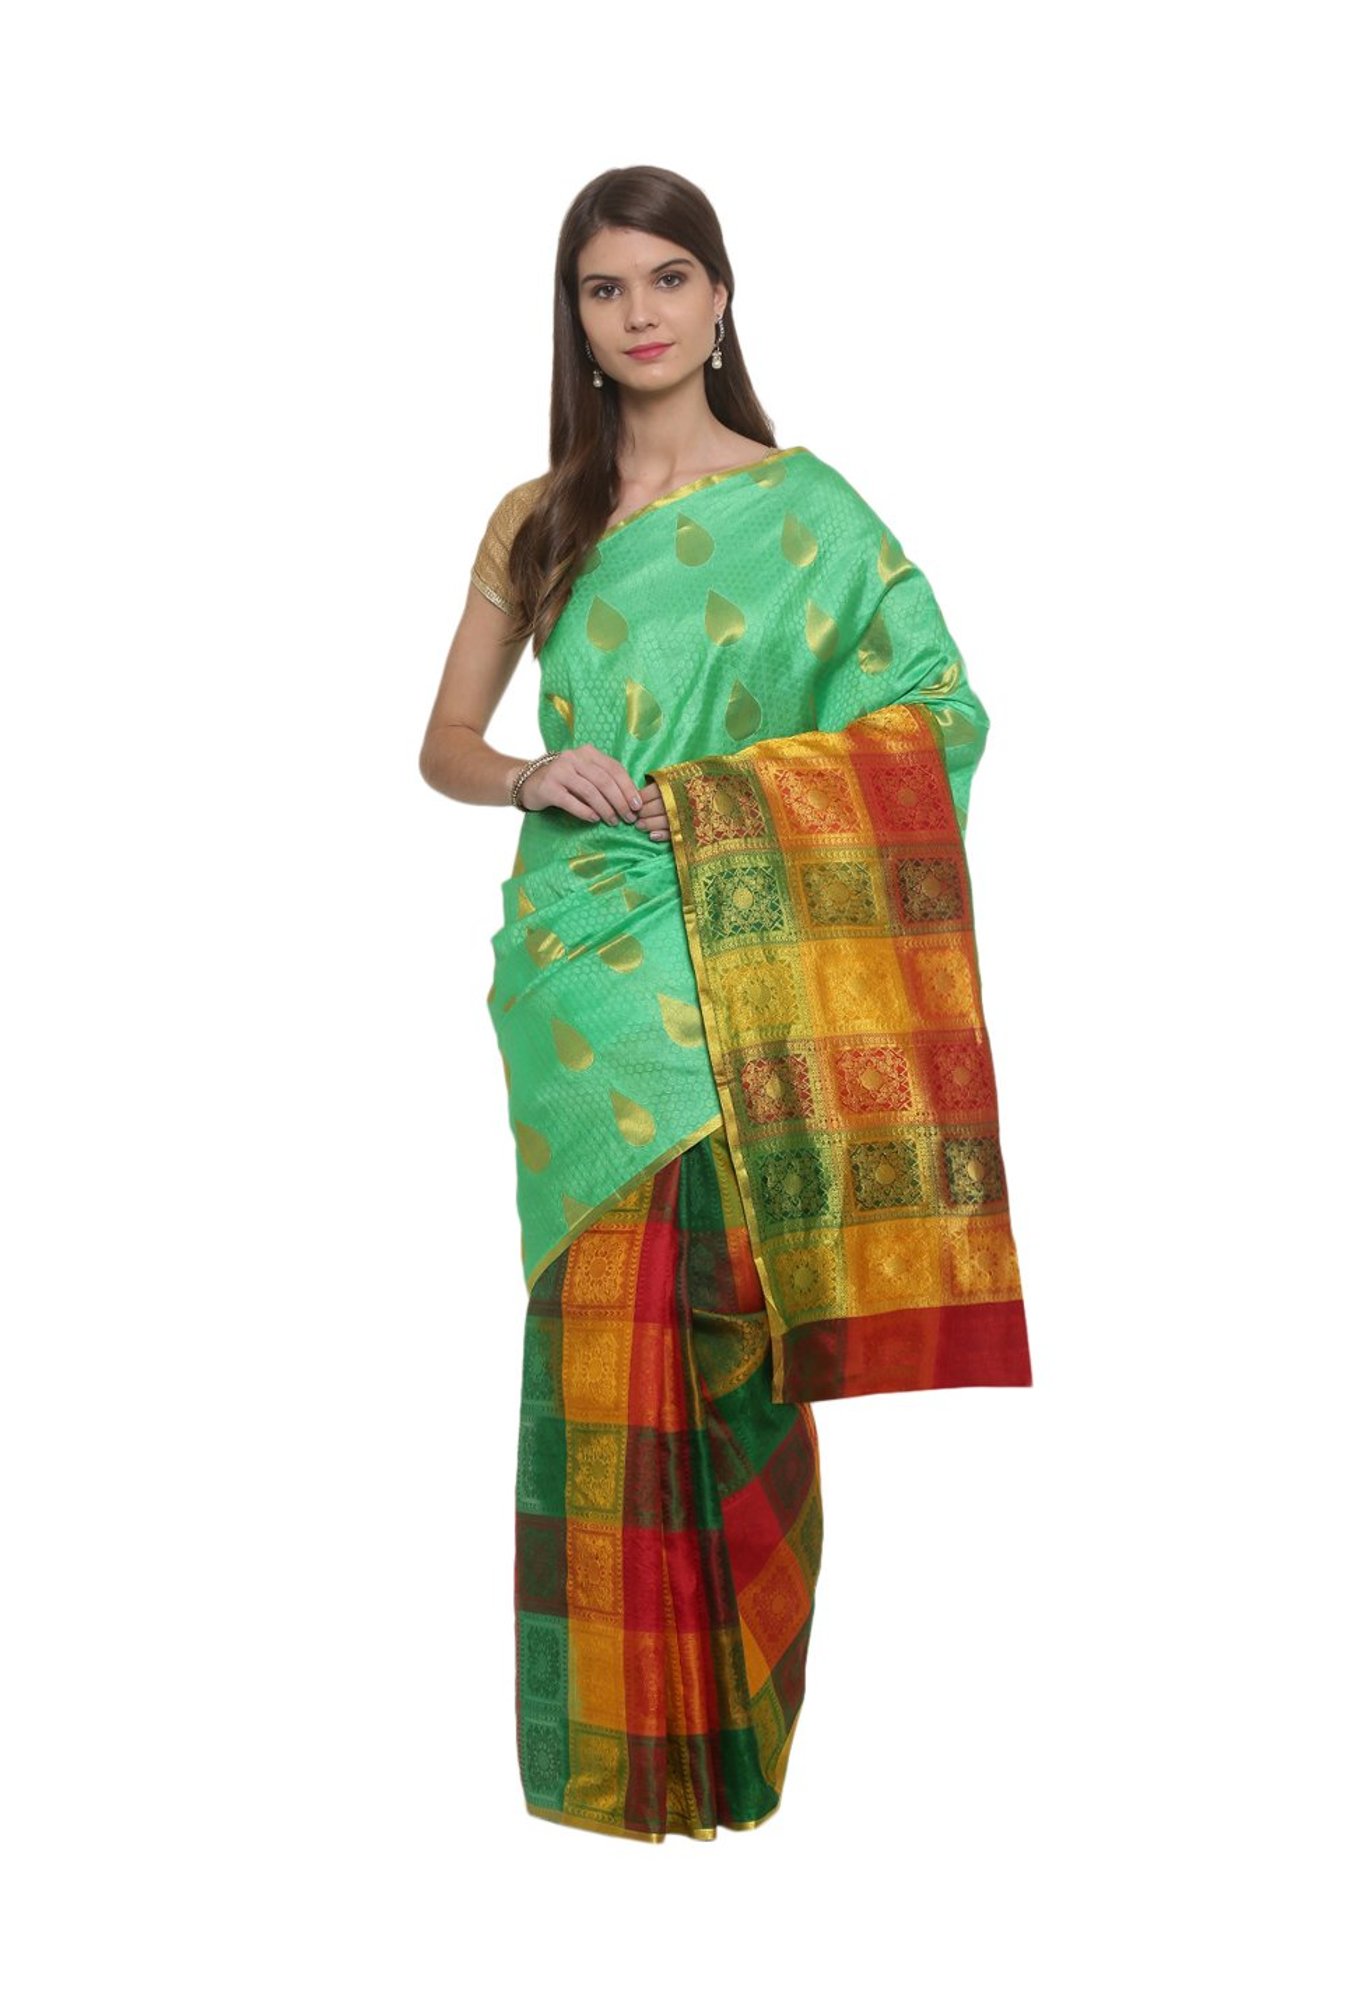 The Chennai Silks Women S Green Half Half Kanjivaram Silk Saree With Blouse From The Chennai Silks At Best Prices On Tata Cliq